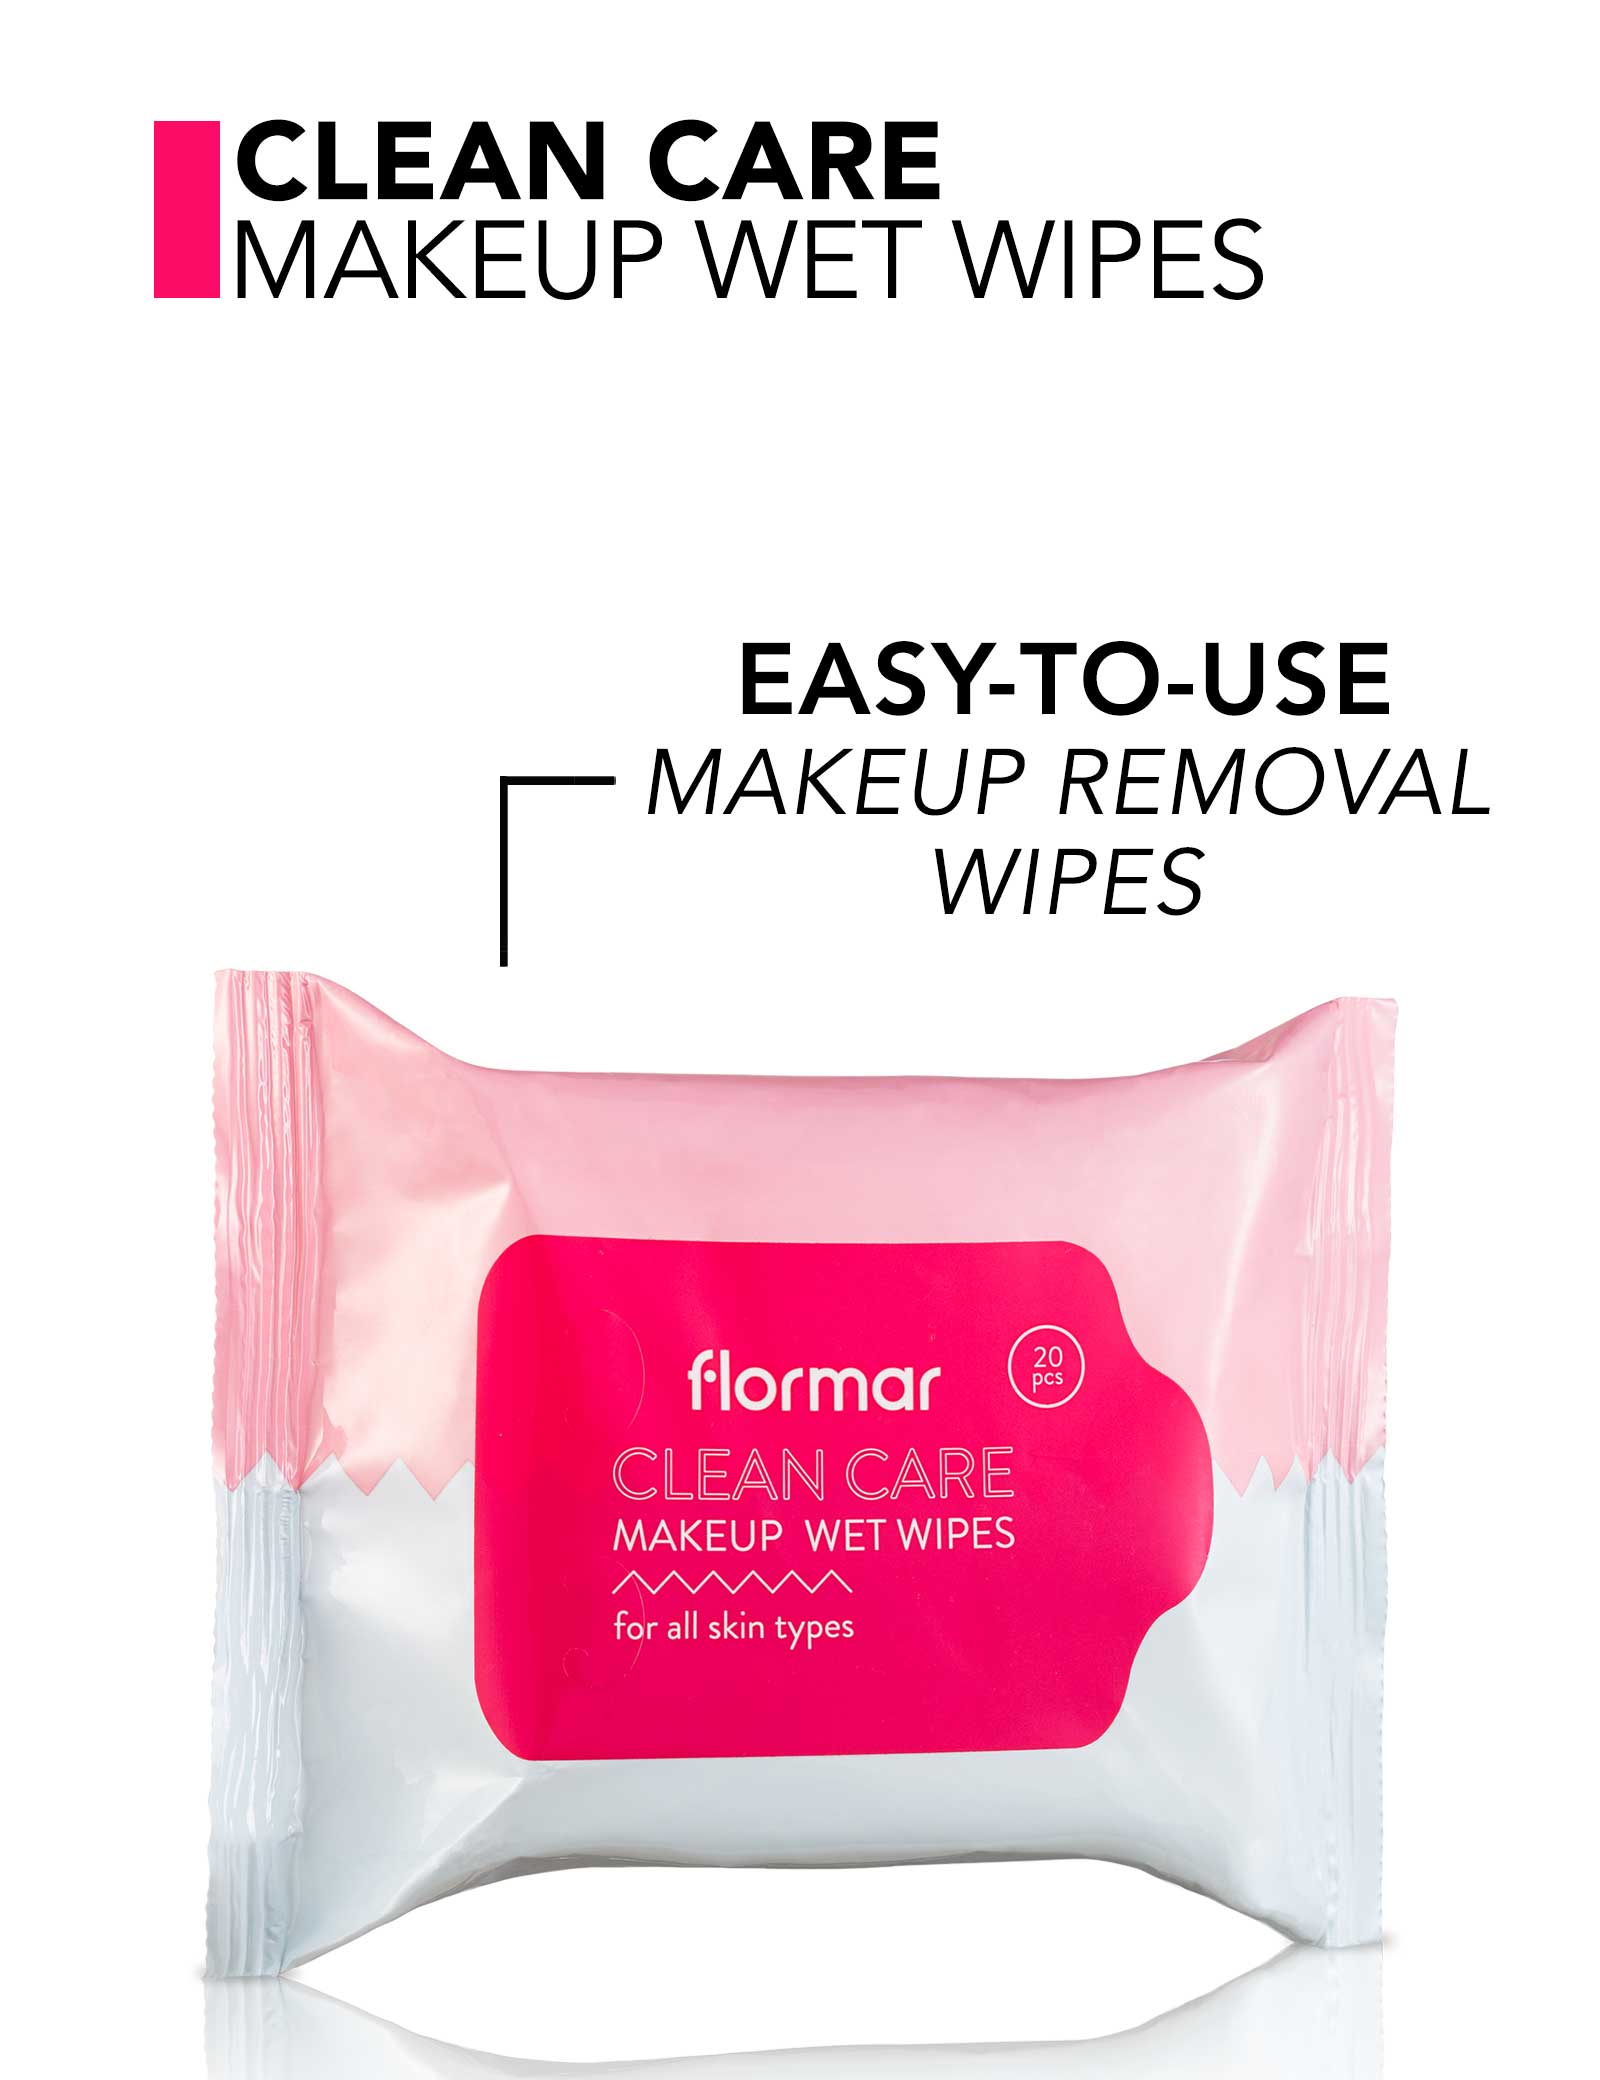 Flormar Clean Care Makeup Wet Wipes